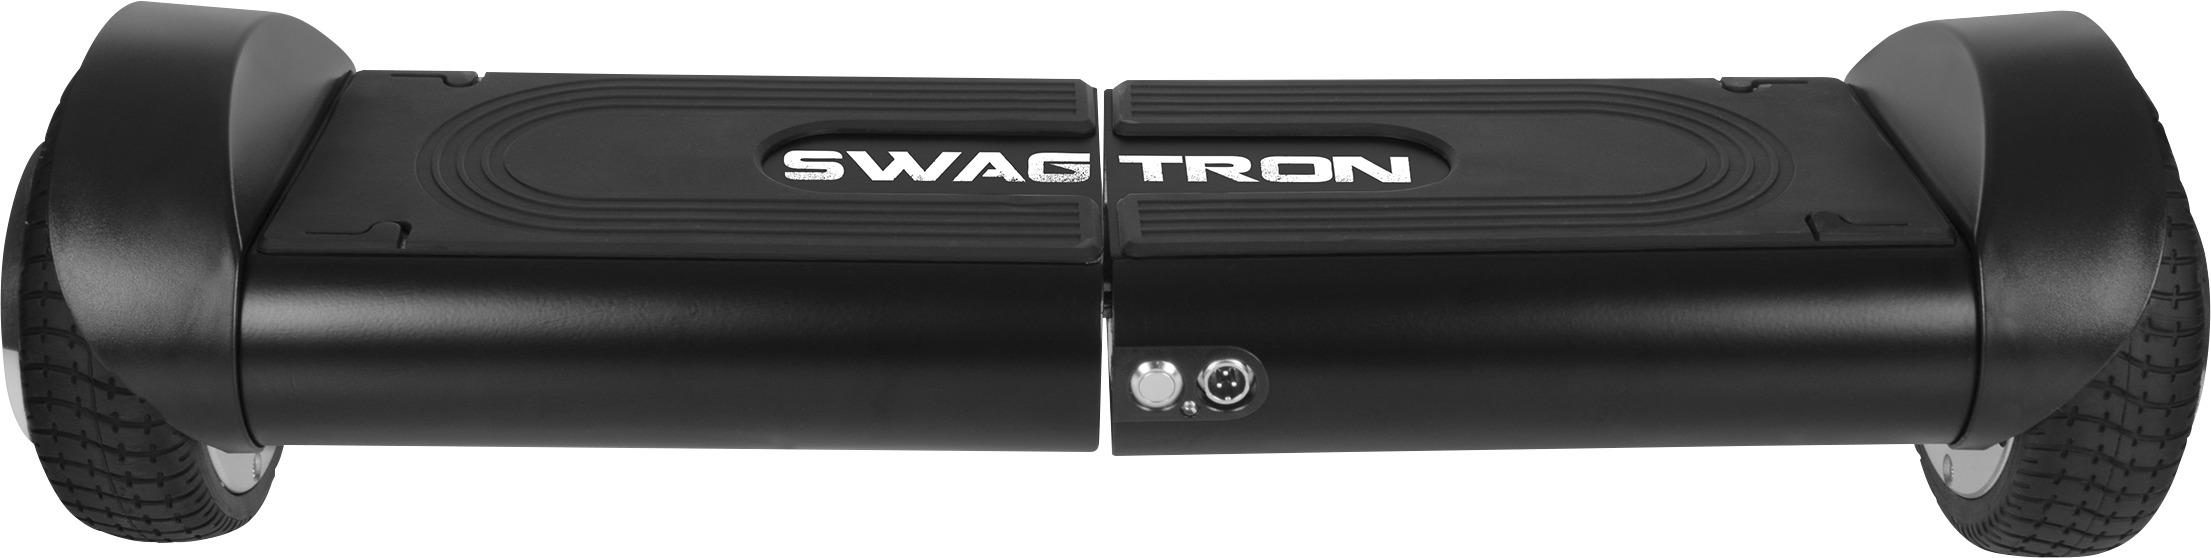 Swagtron - T8 Self-Balancing Scooter - Black